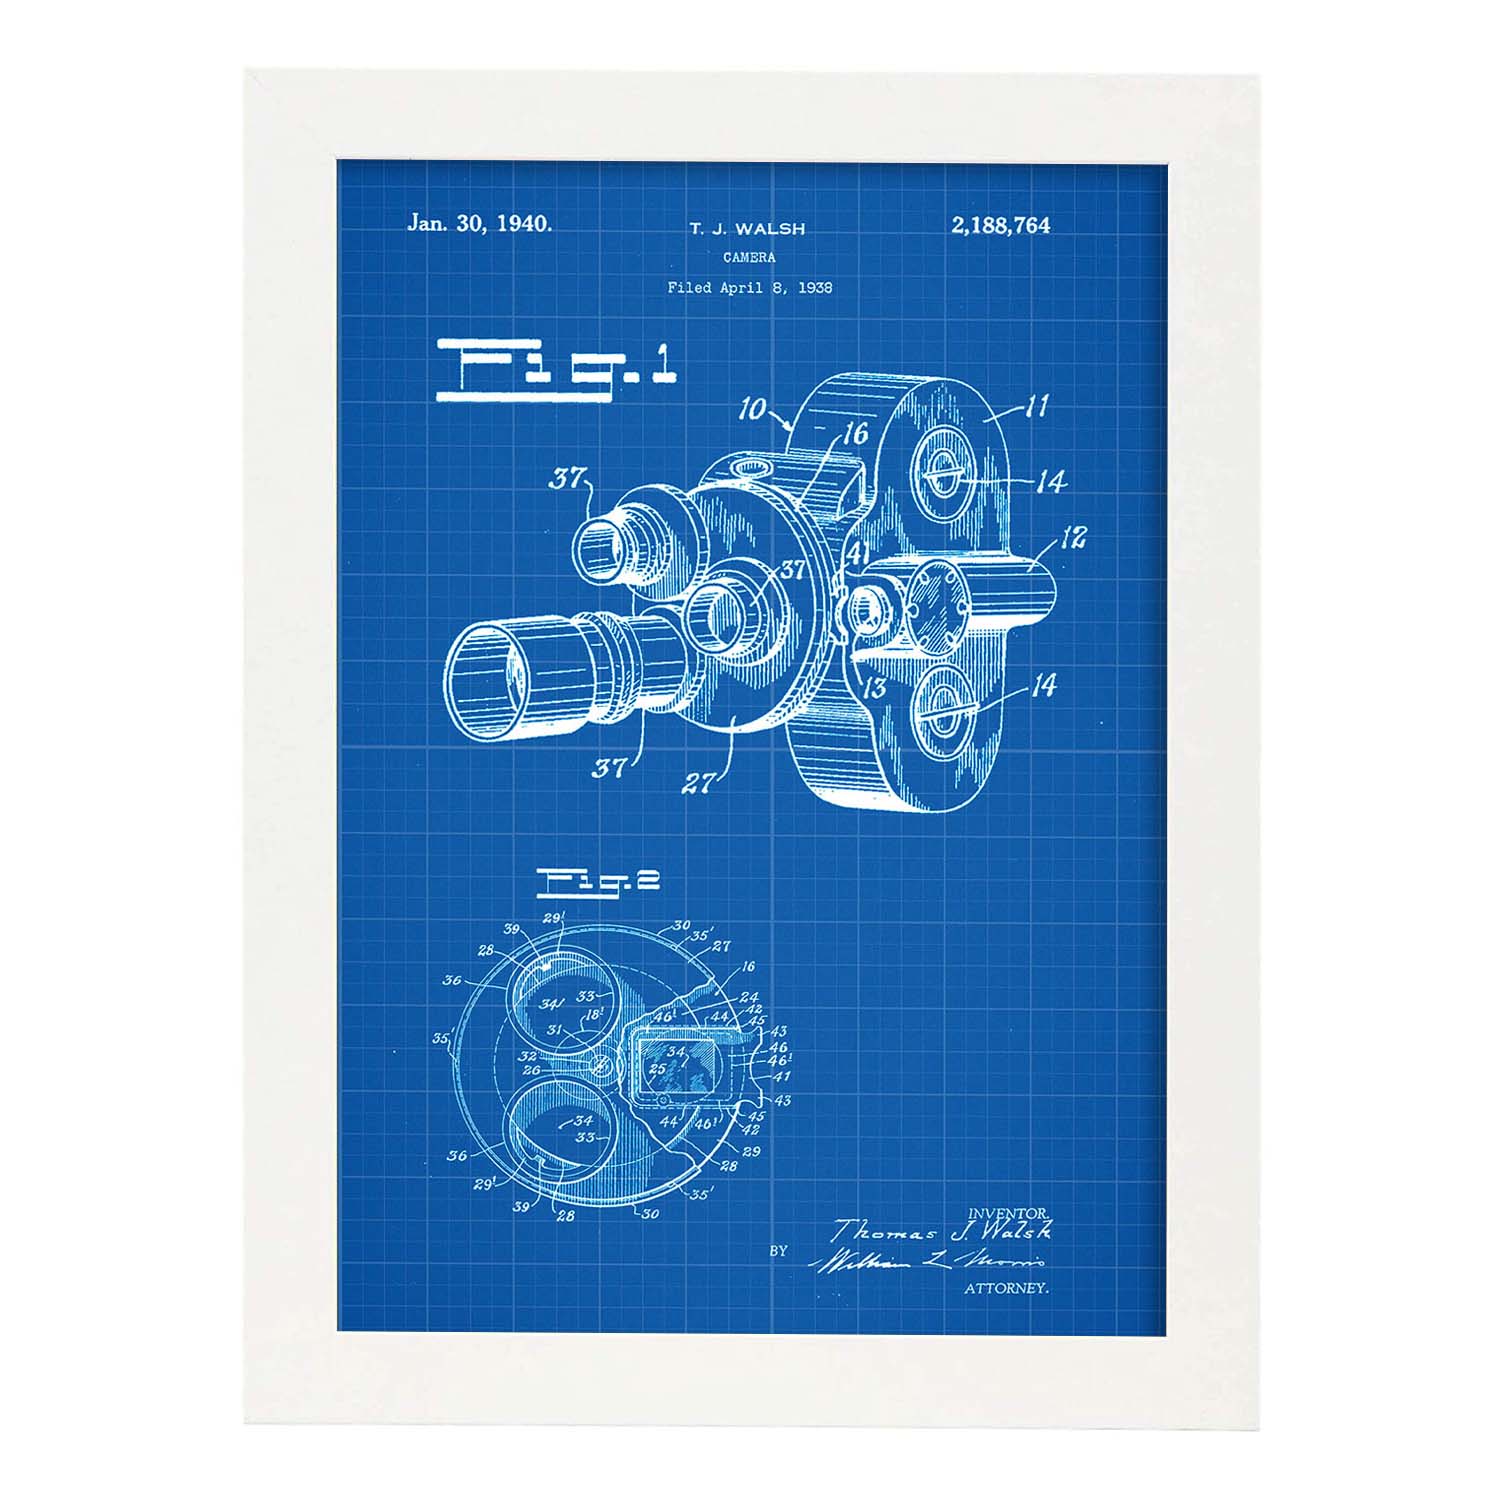 Poster con patente de Camara de fotos 8 milimetros. Lámina con diseño de patente antigua-Artwork-Nacnic-A4-Marco Blanco-Nacnic Estudio SL